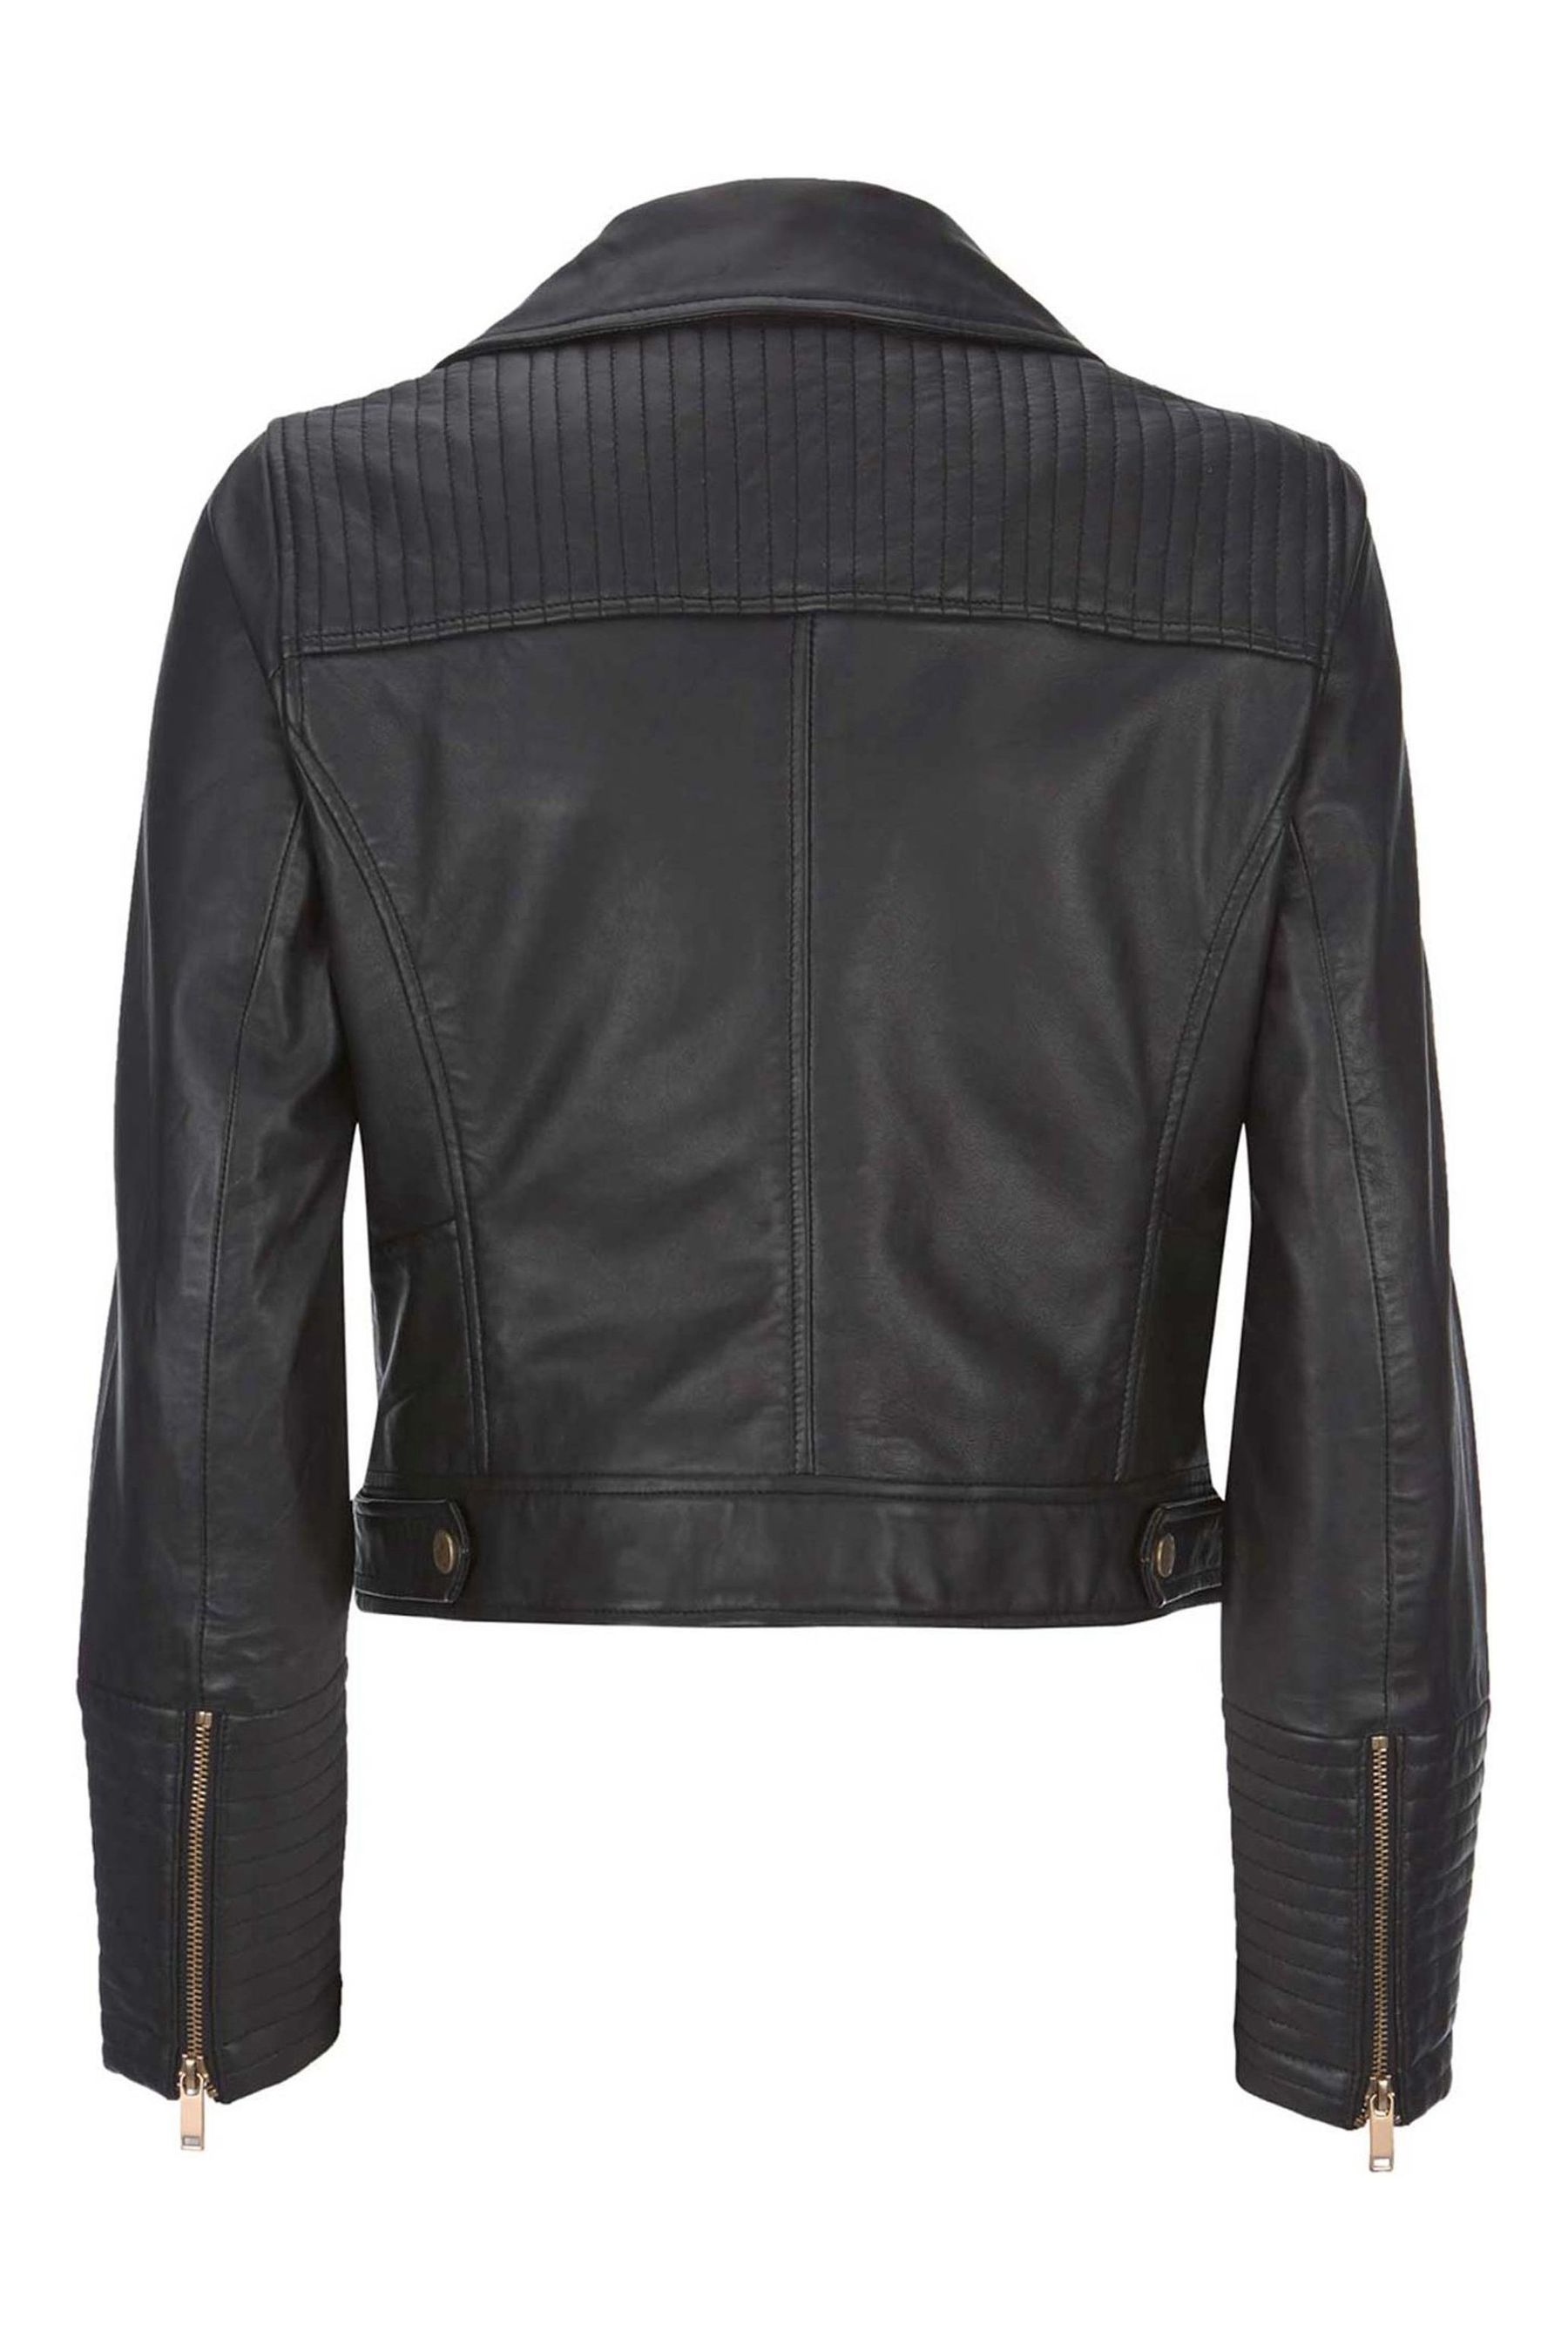 Buy Mint Velvet Casual Black Leather Jacket from the Next UK online shop